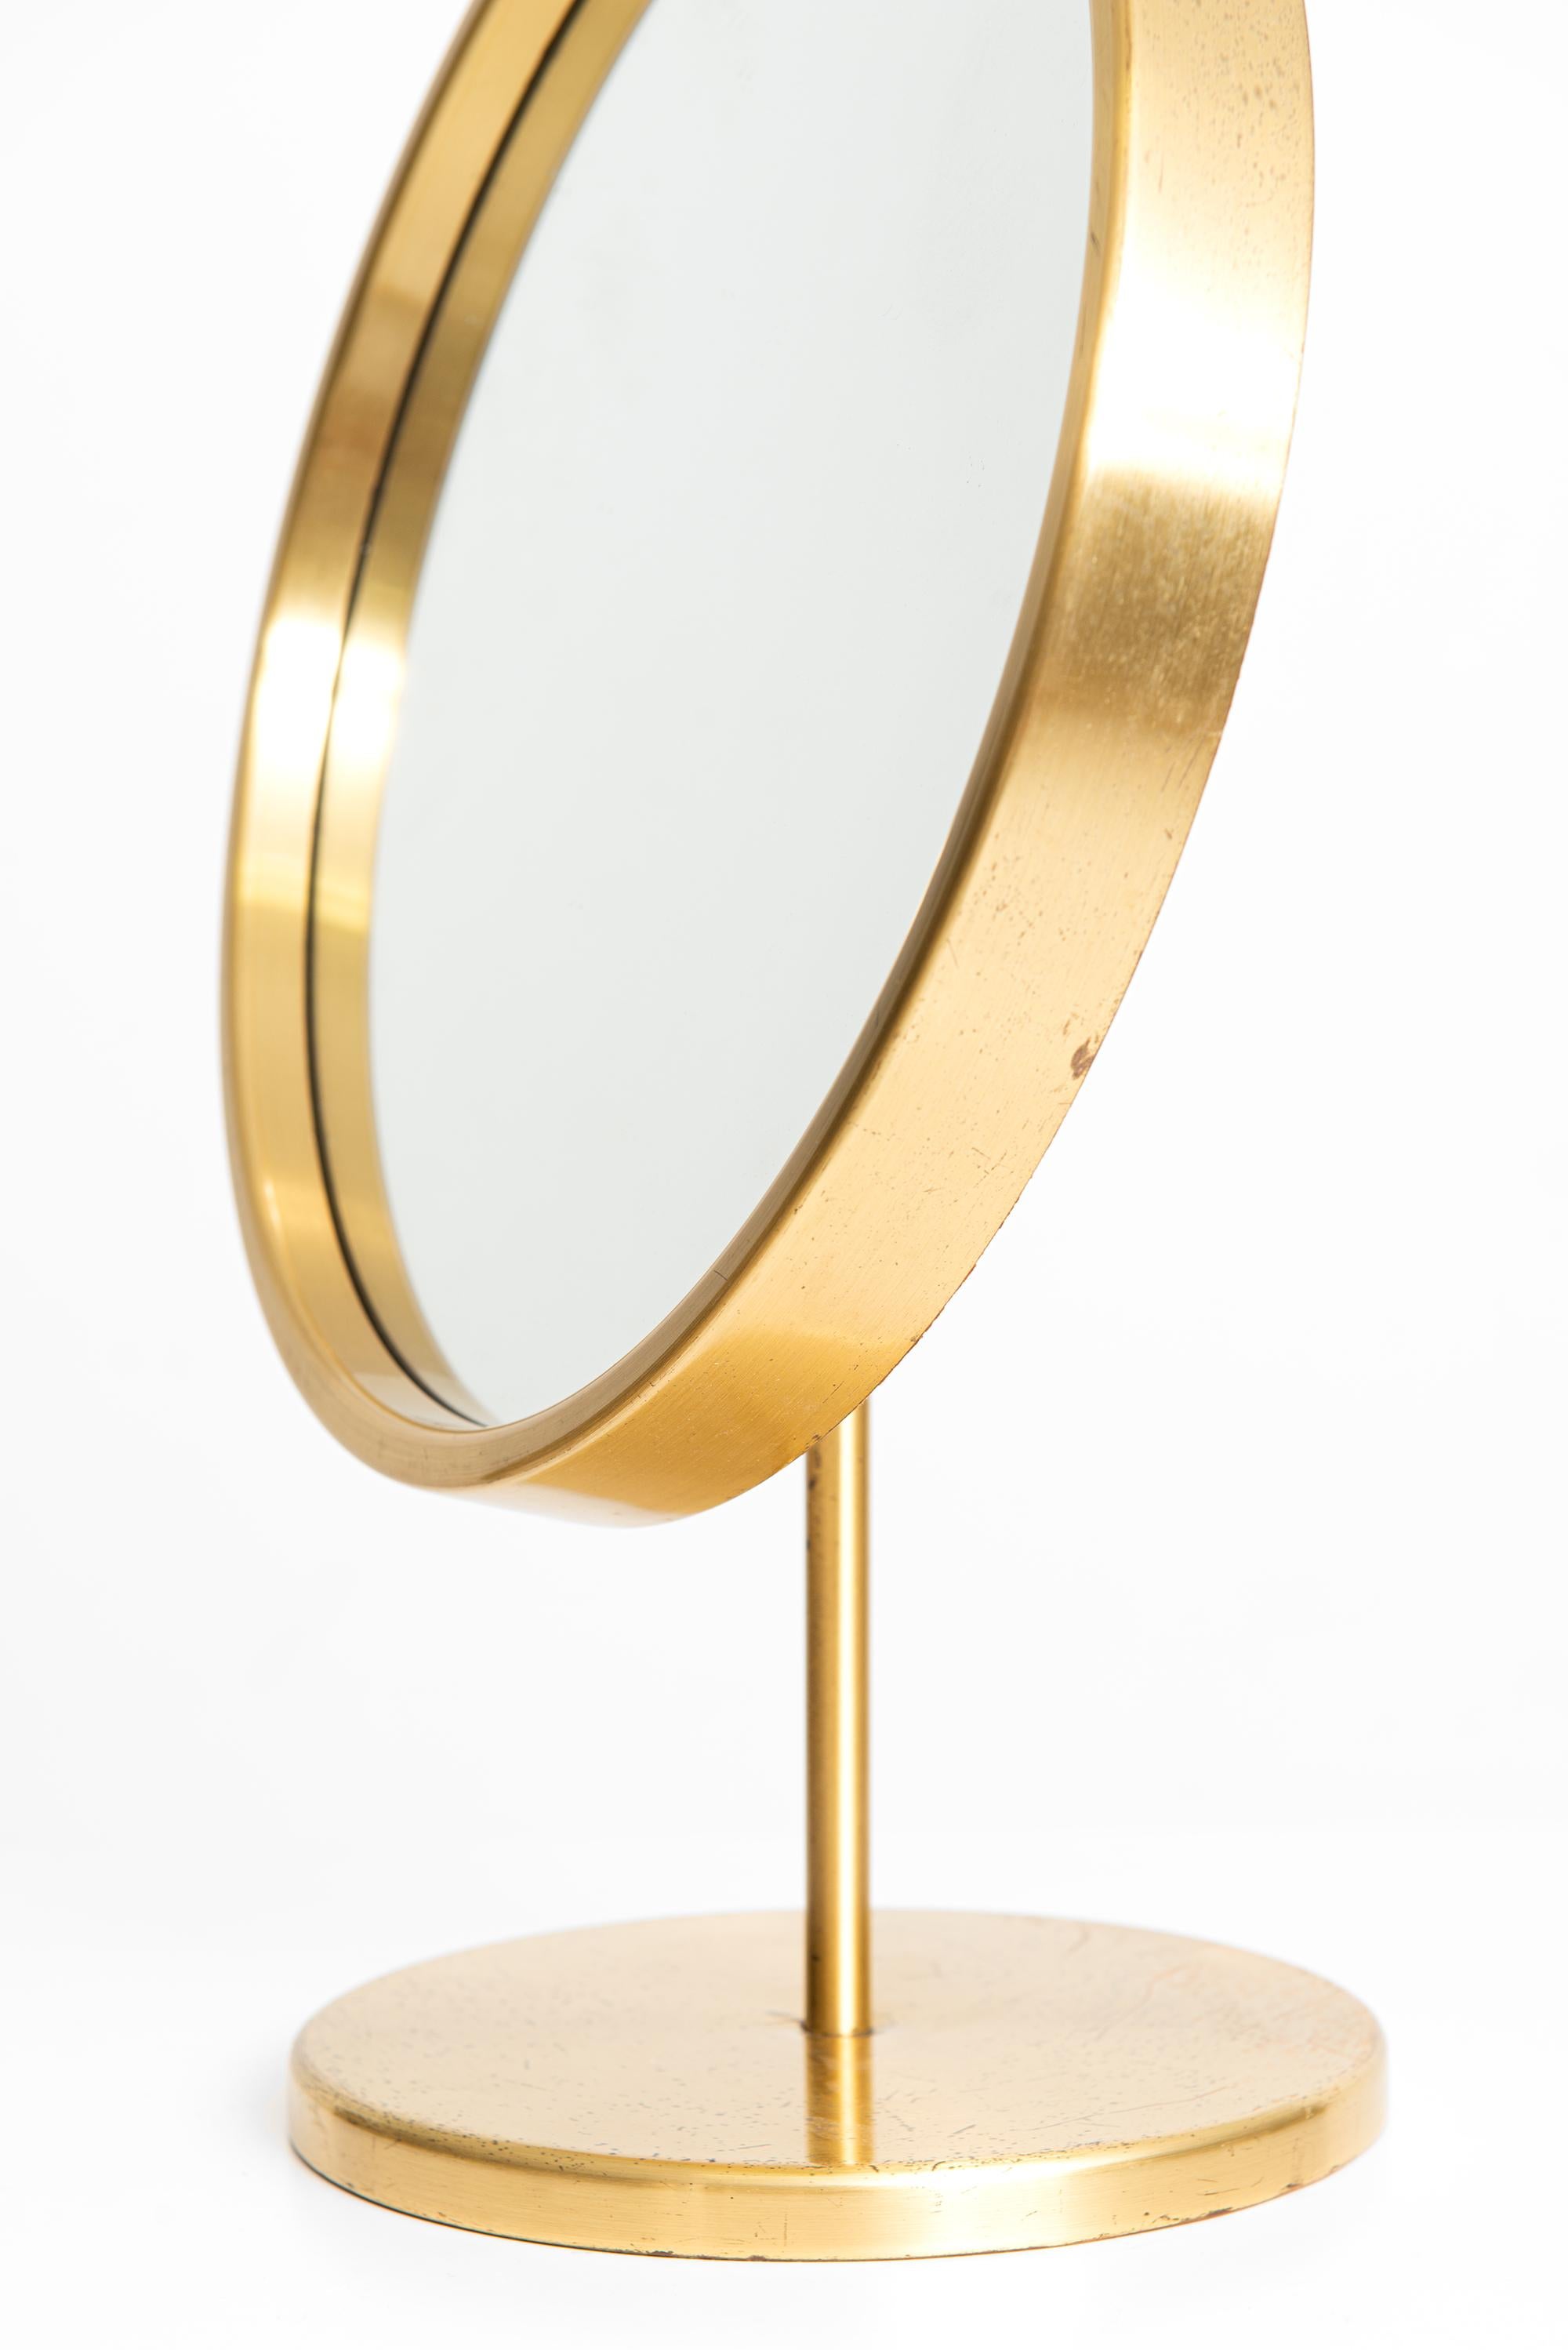 Scandinavian Modern Table Mirror in Brass Produced by Glas Mäster in Markaryd, Sweden For Sale